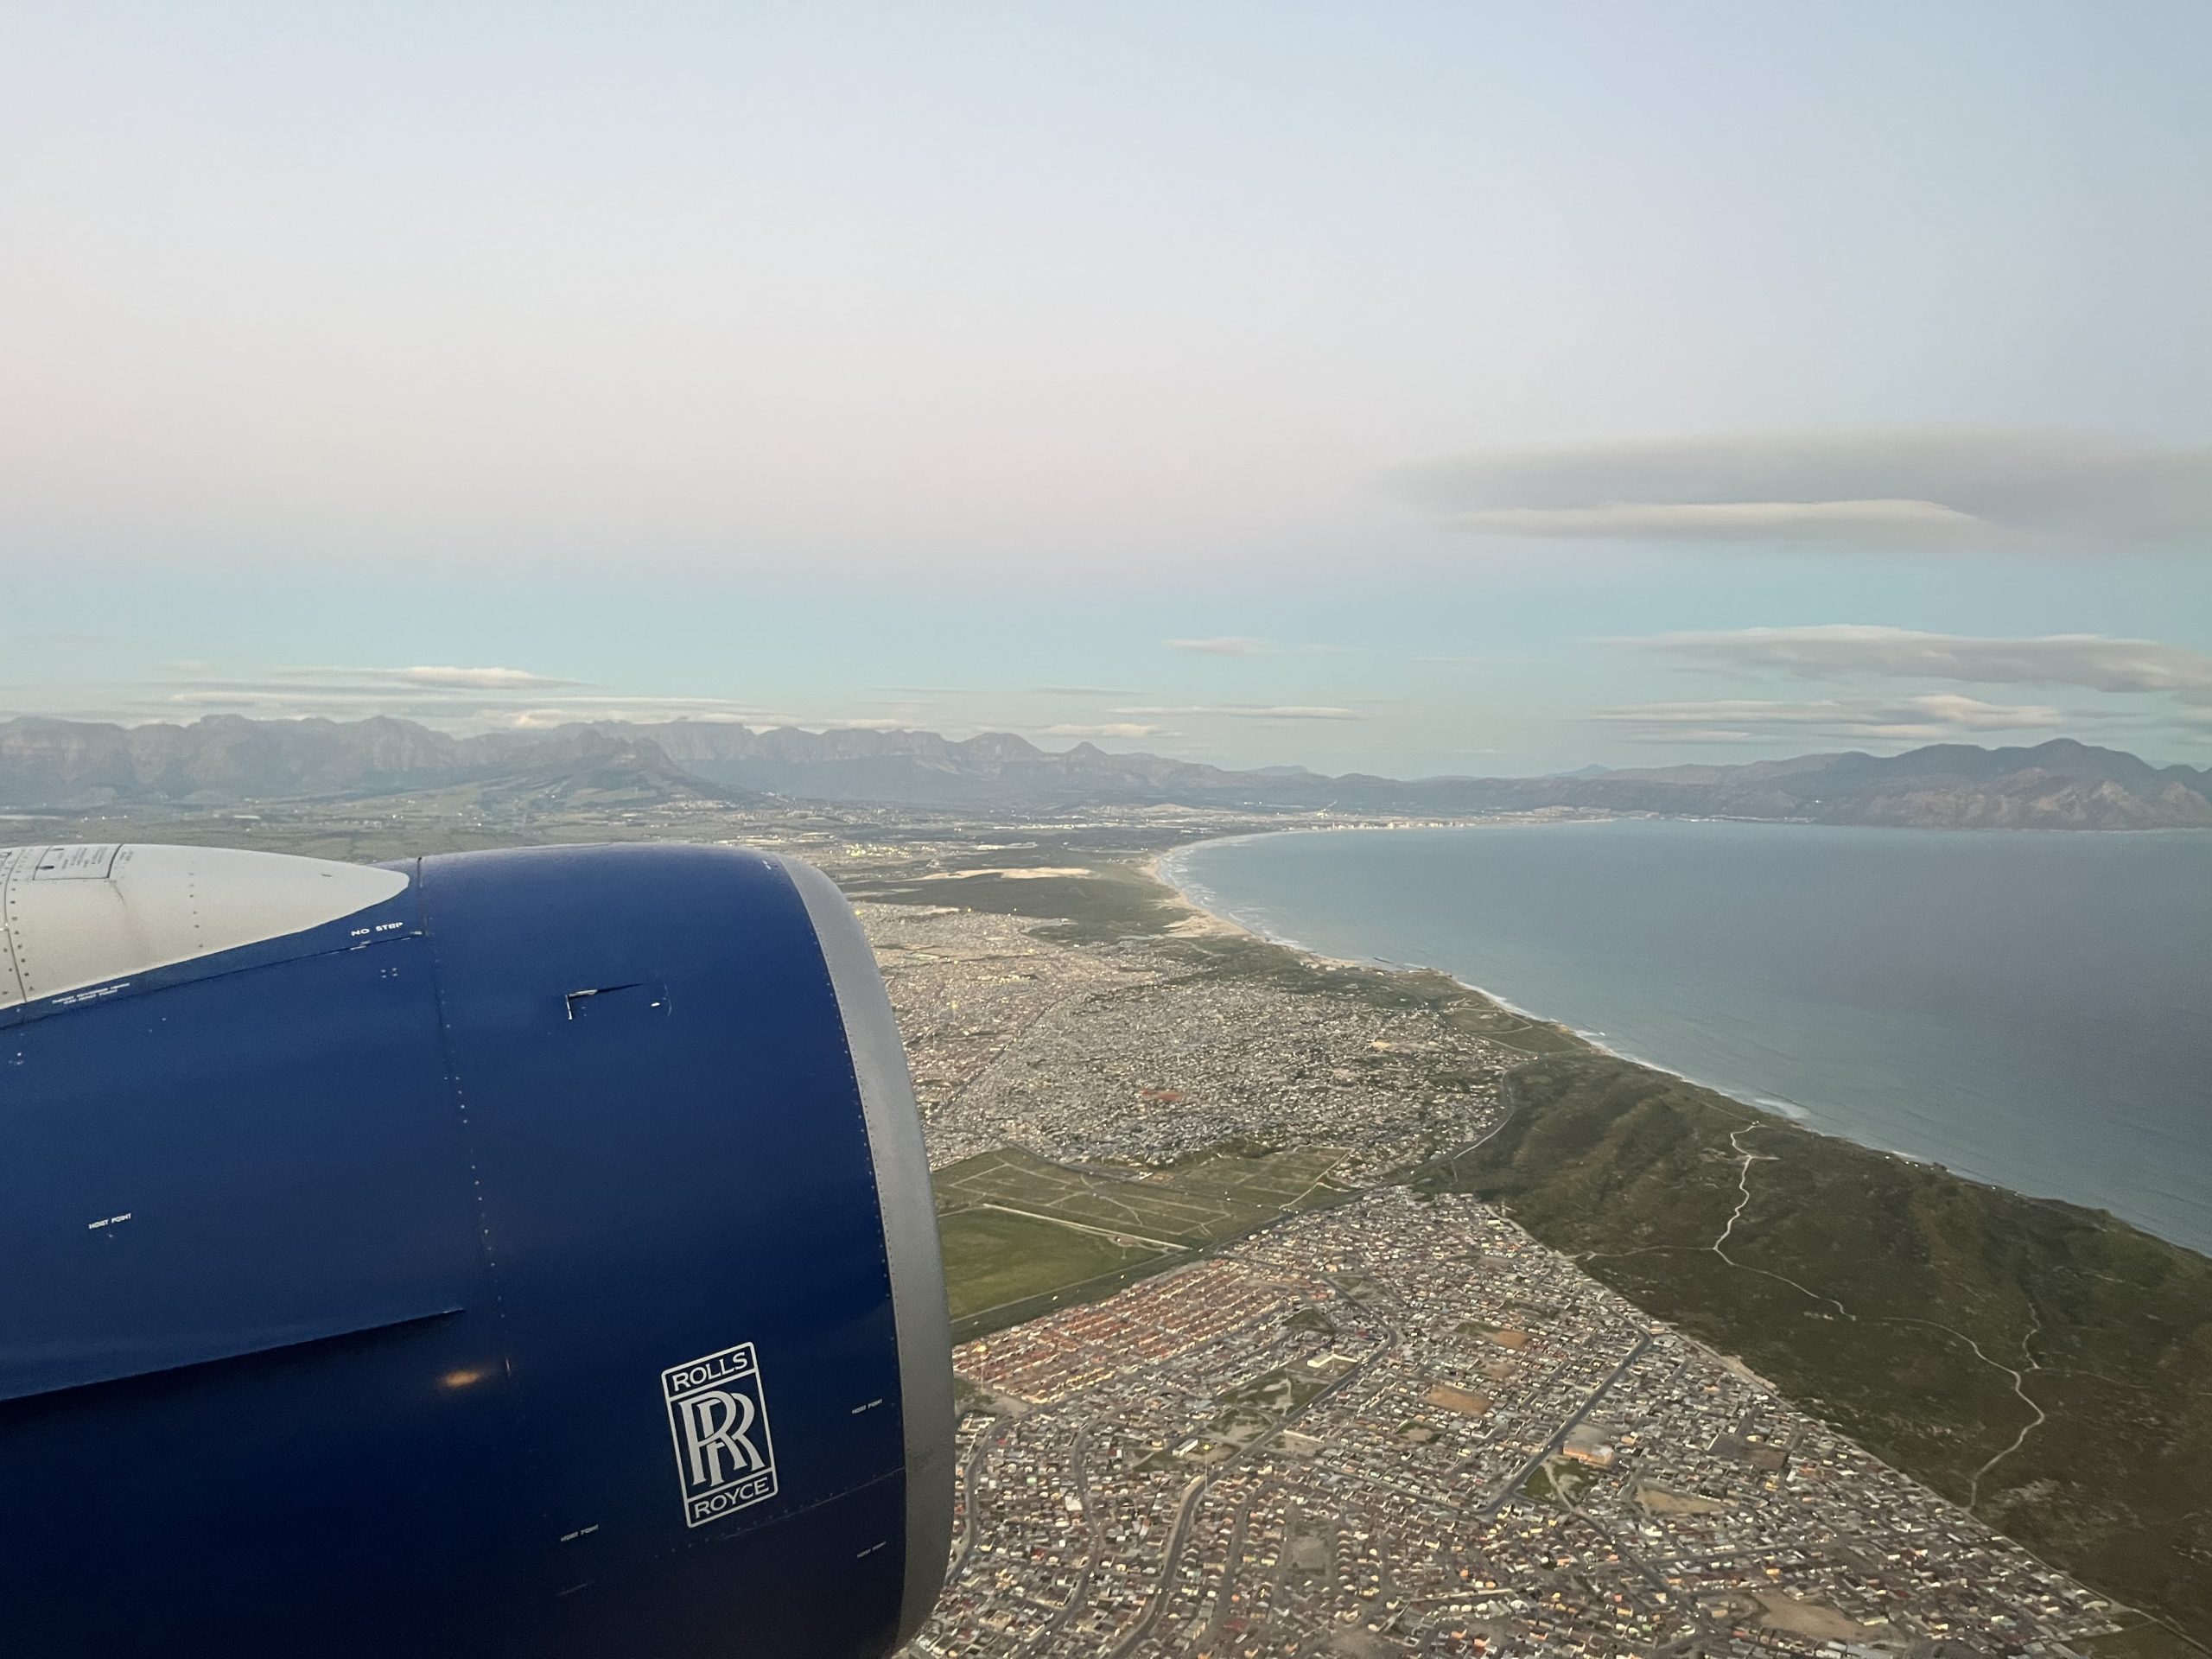 Goodbye Cape Town!